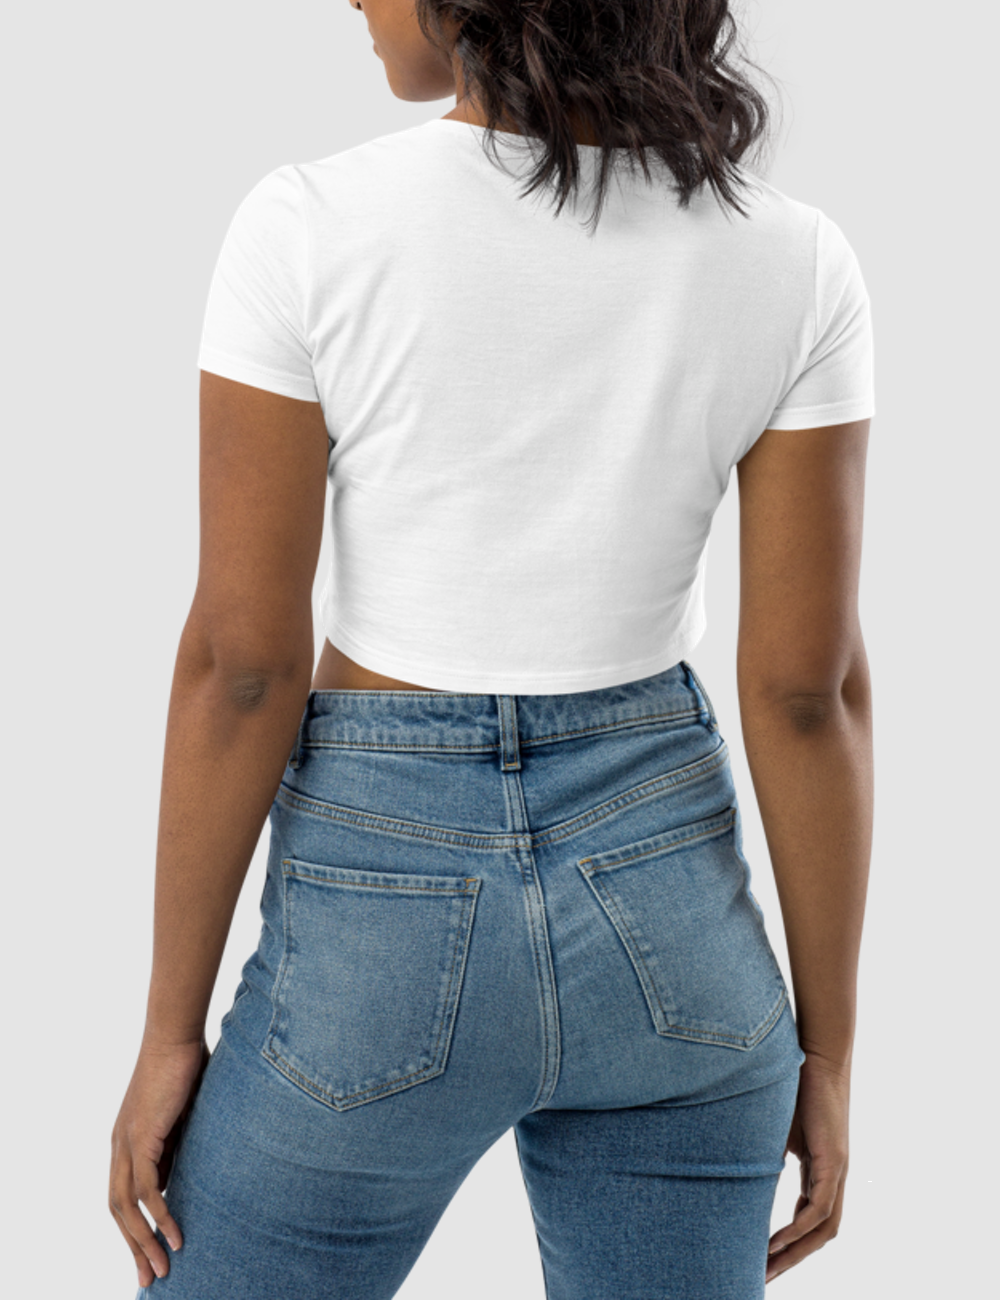 Sample Size | Women's Crop Top T-Shirt OniTakai